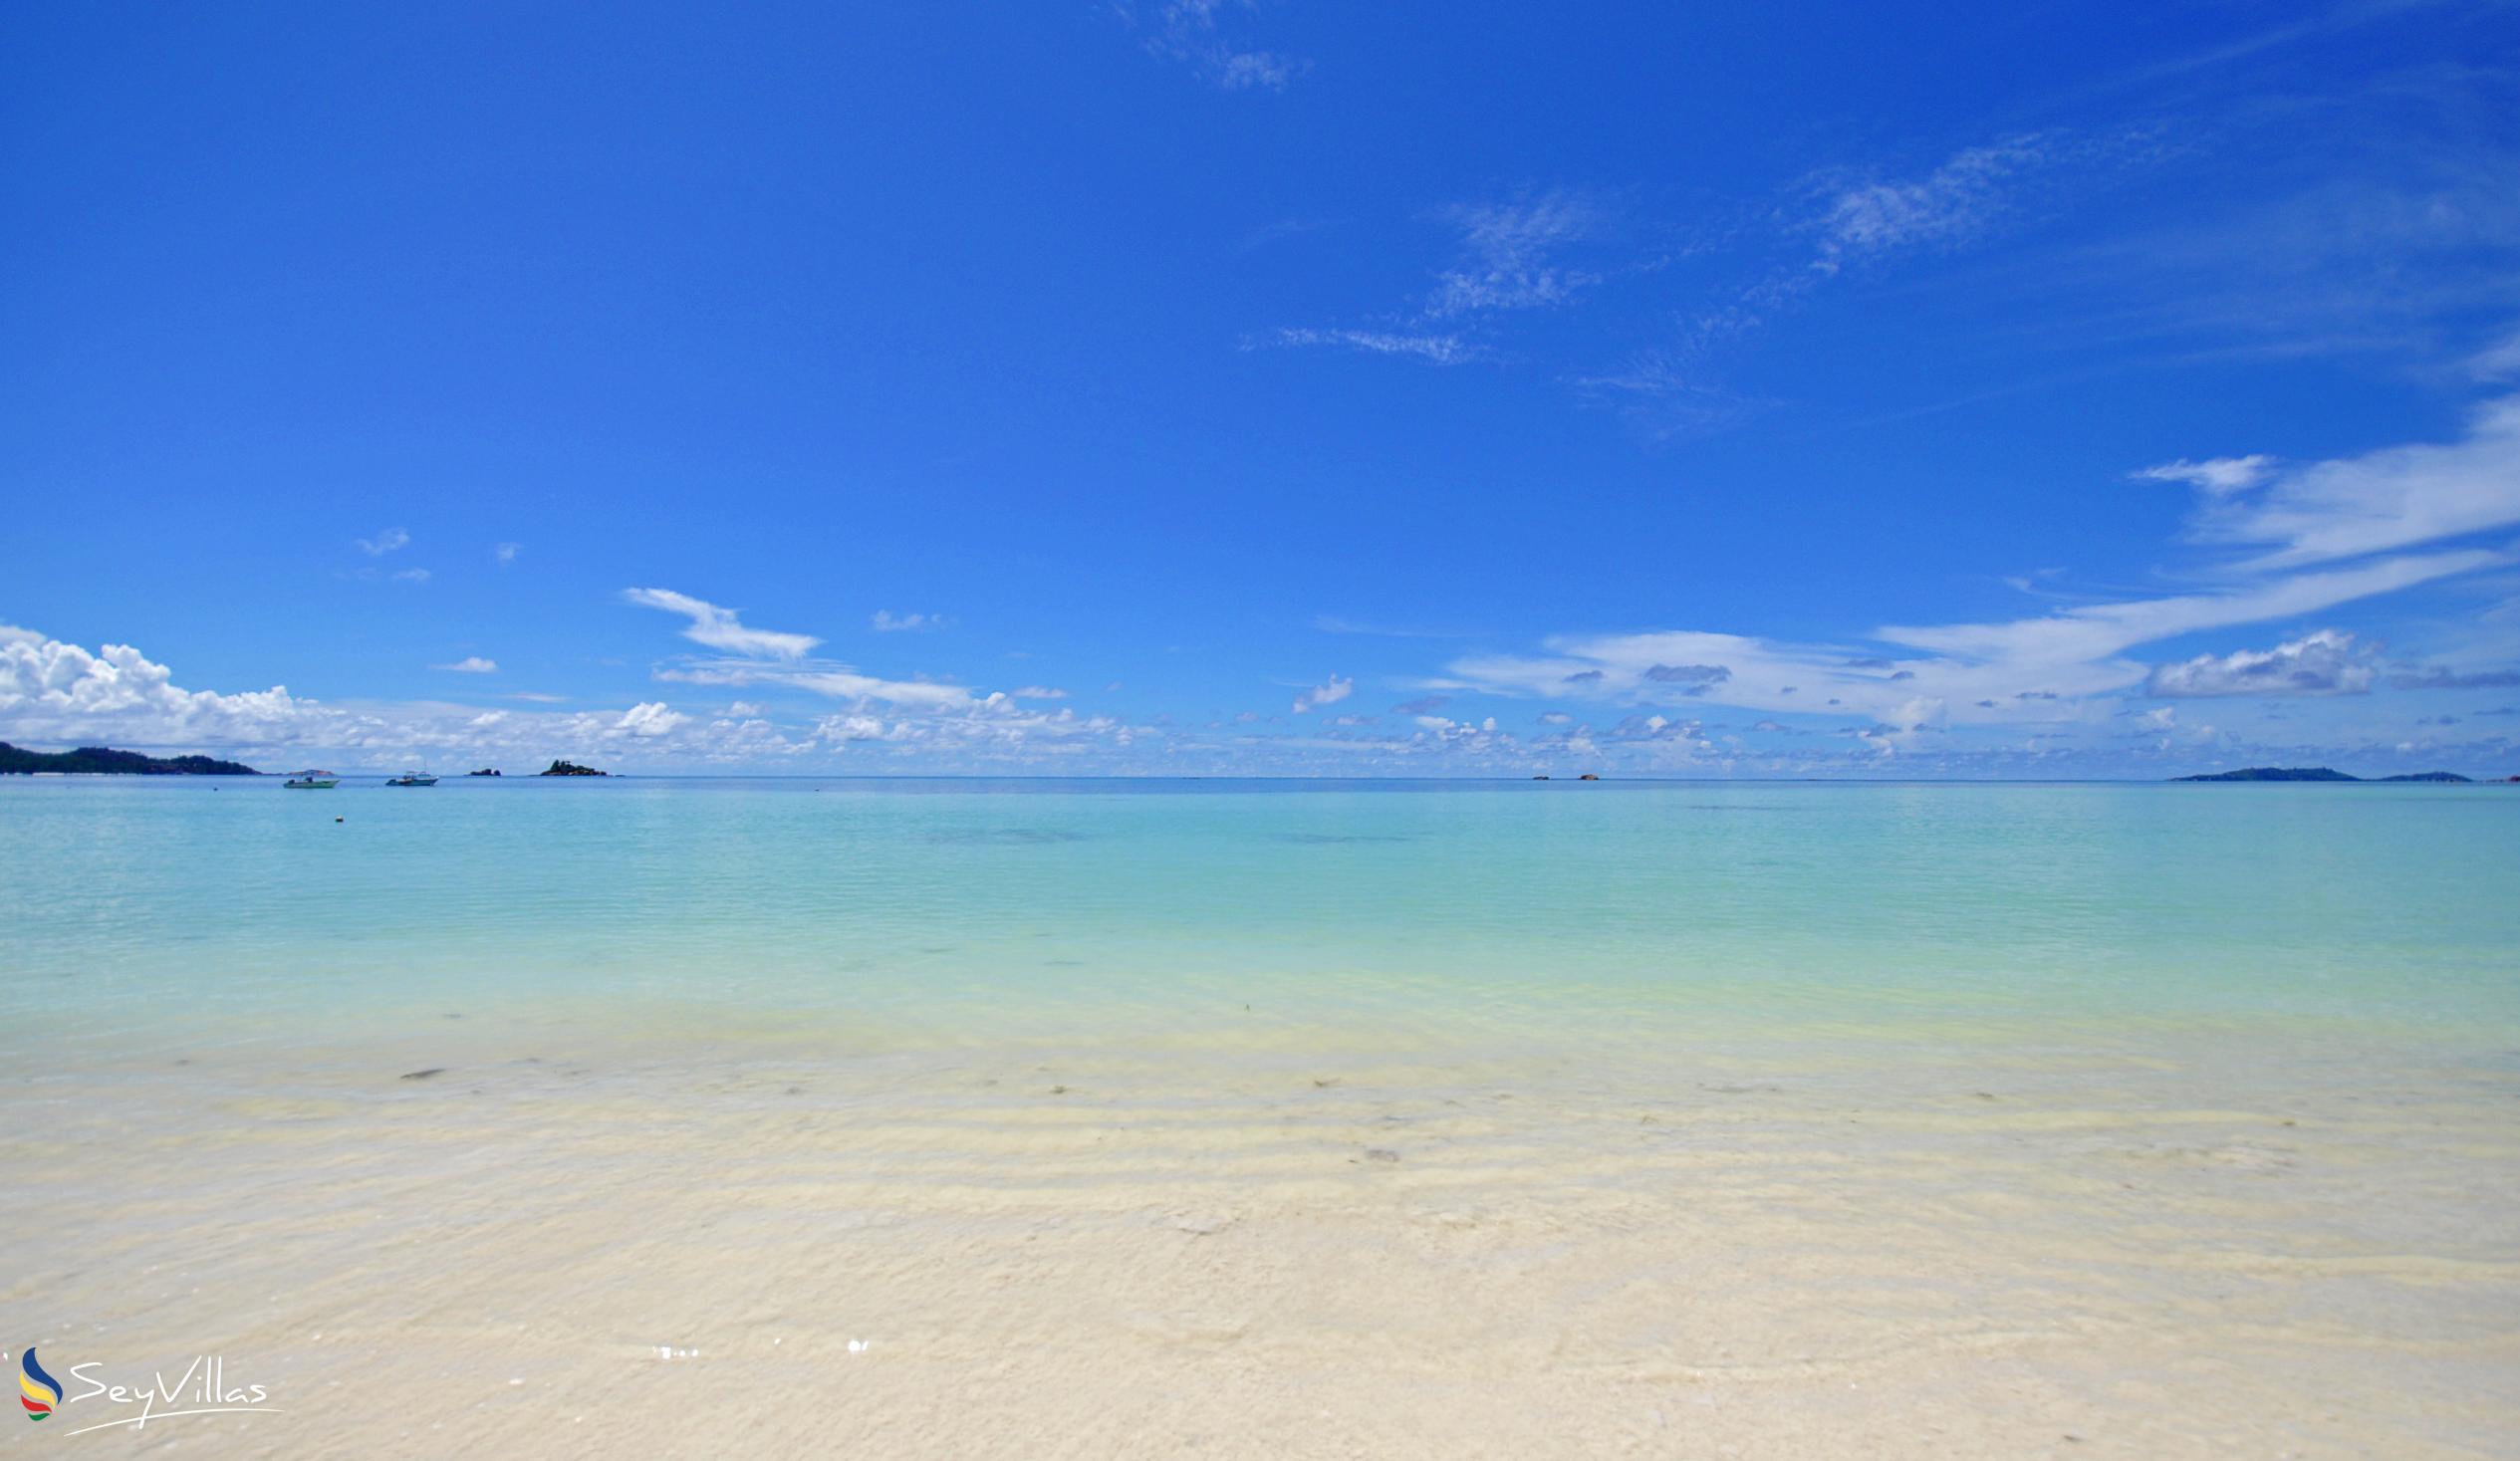 Photo 78: Cote d'Or Footprints - Beaches - Praslin (Seychelles)